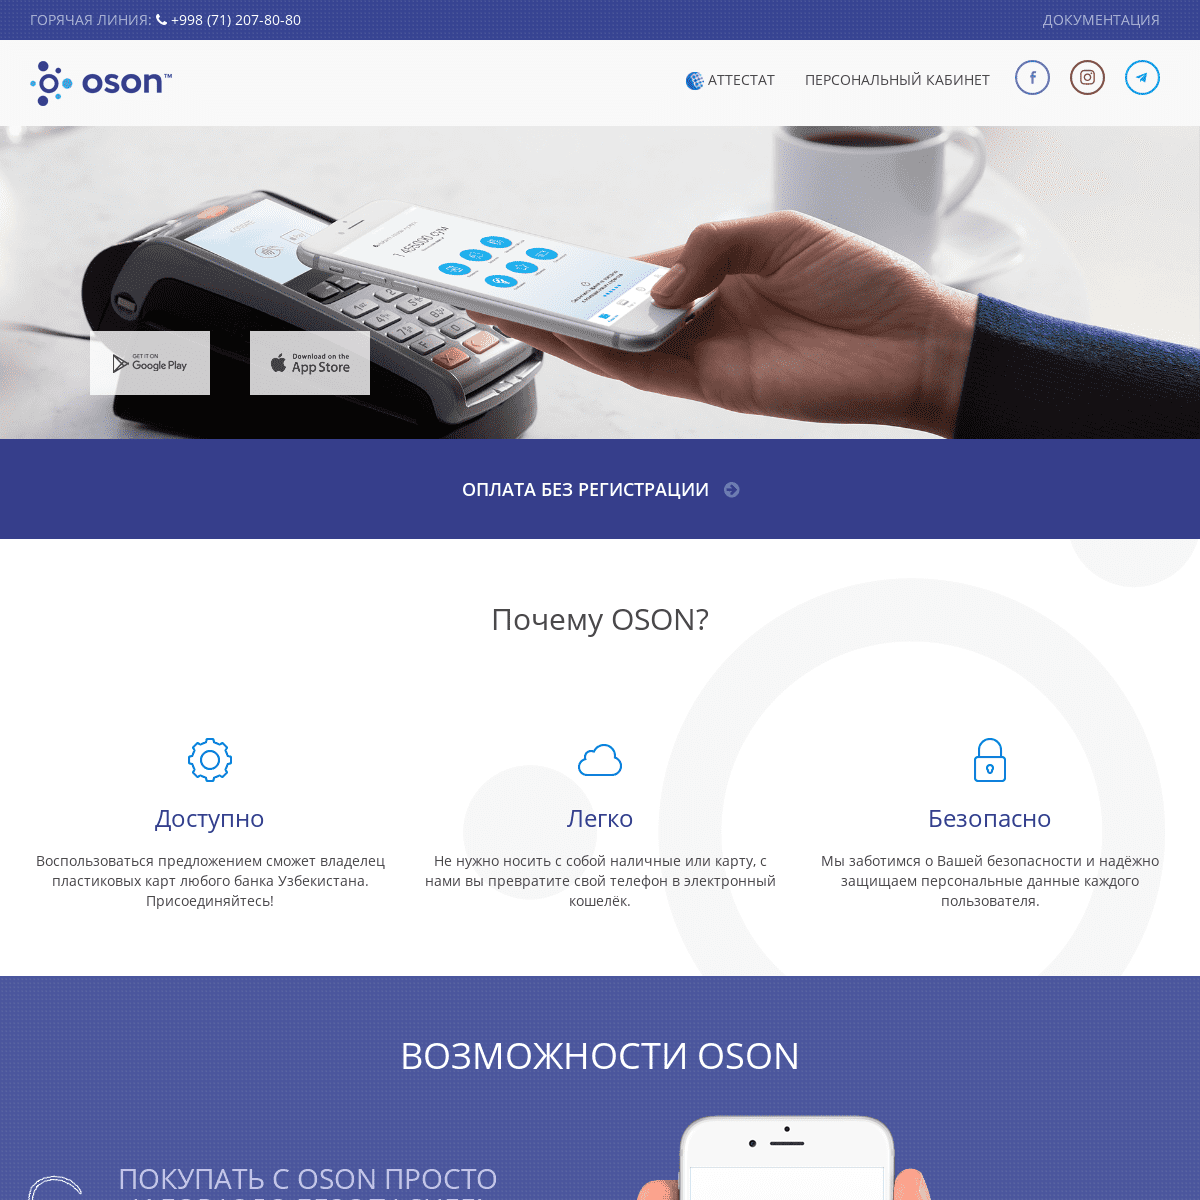 OSON – электронная платежная система Узбекистана